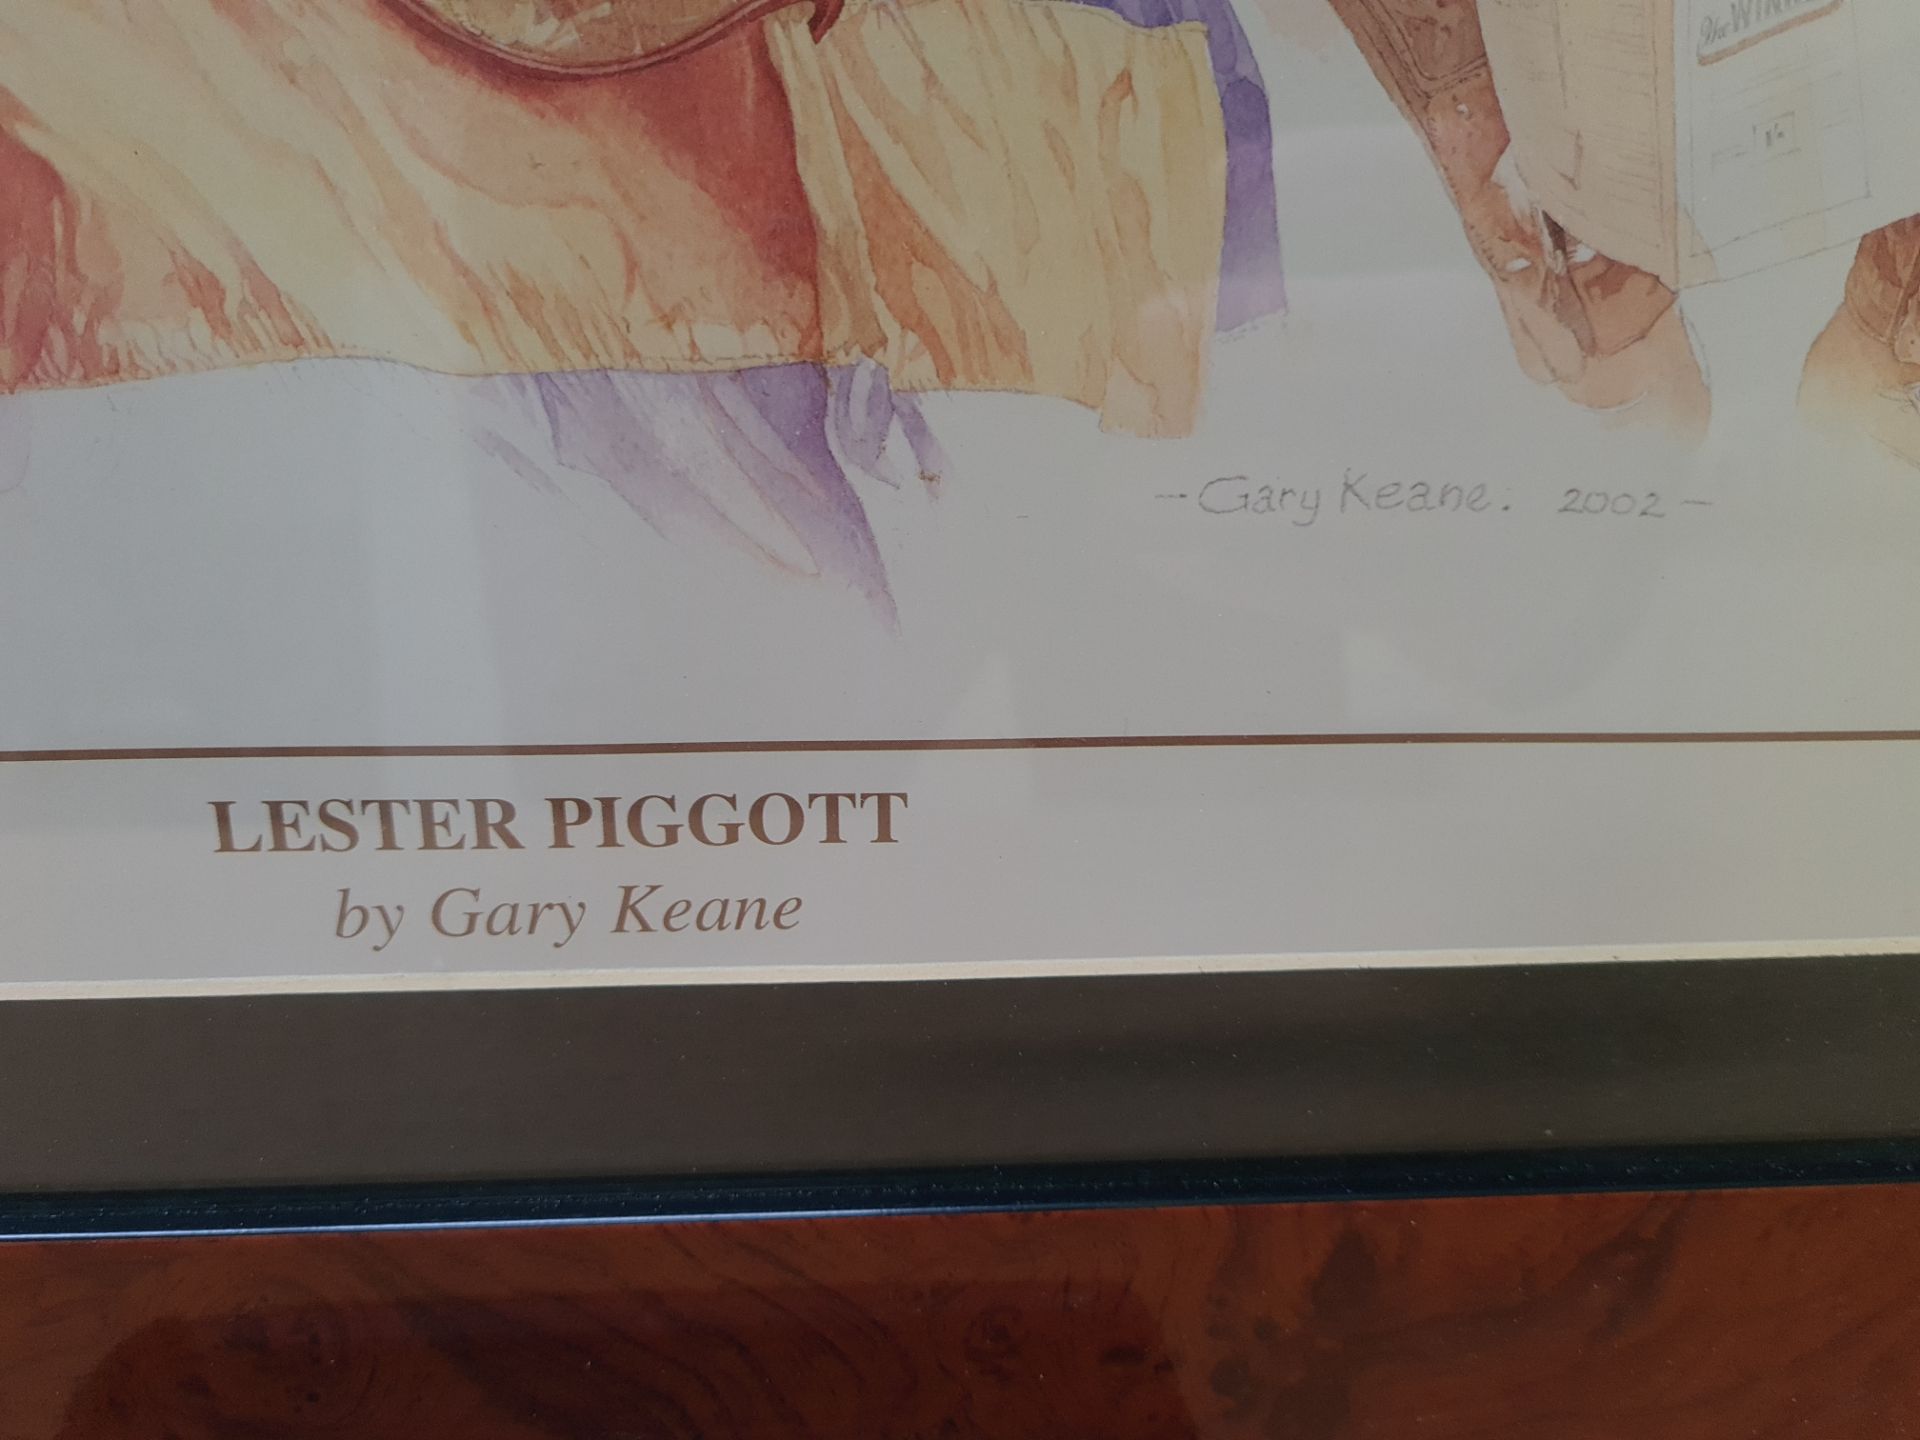 Signed Framed Limited Edition Print of Lester Piggott (192/495) by Gary Keane, 58cm x 48cm - Image 4 of 4